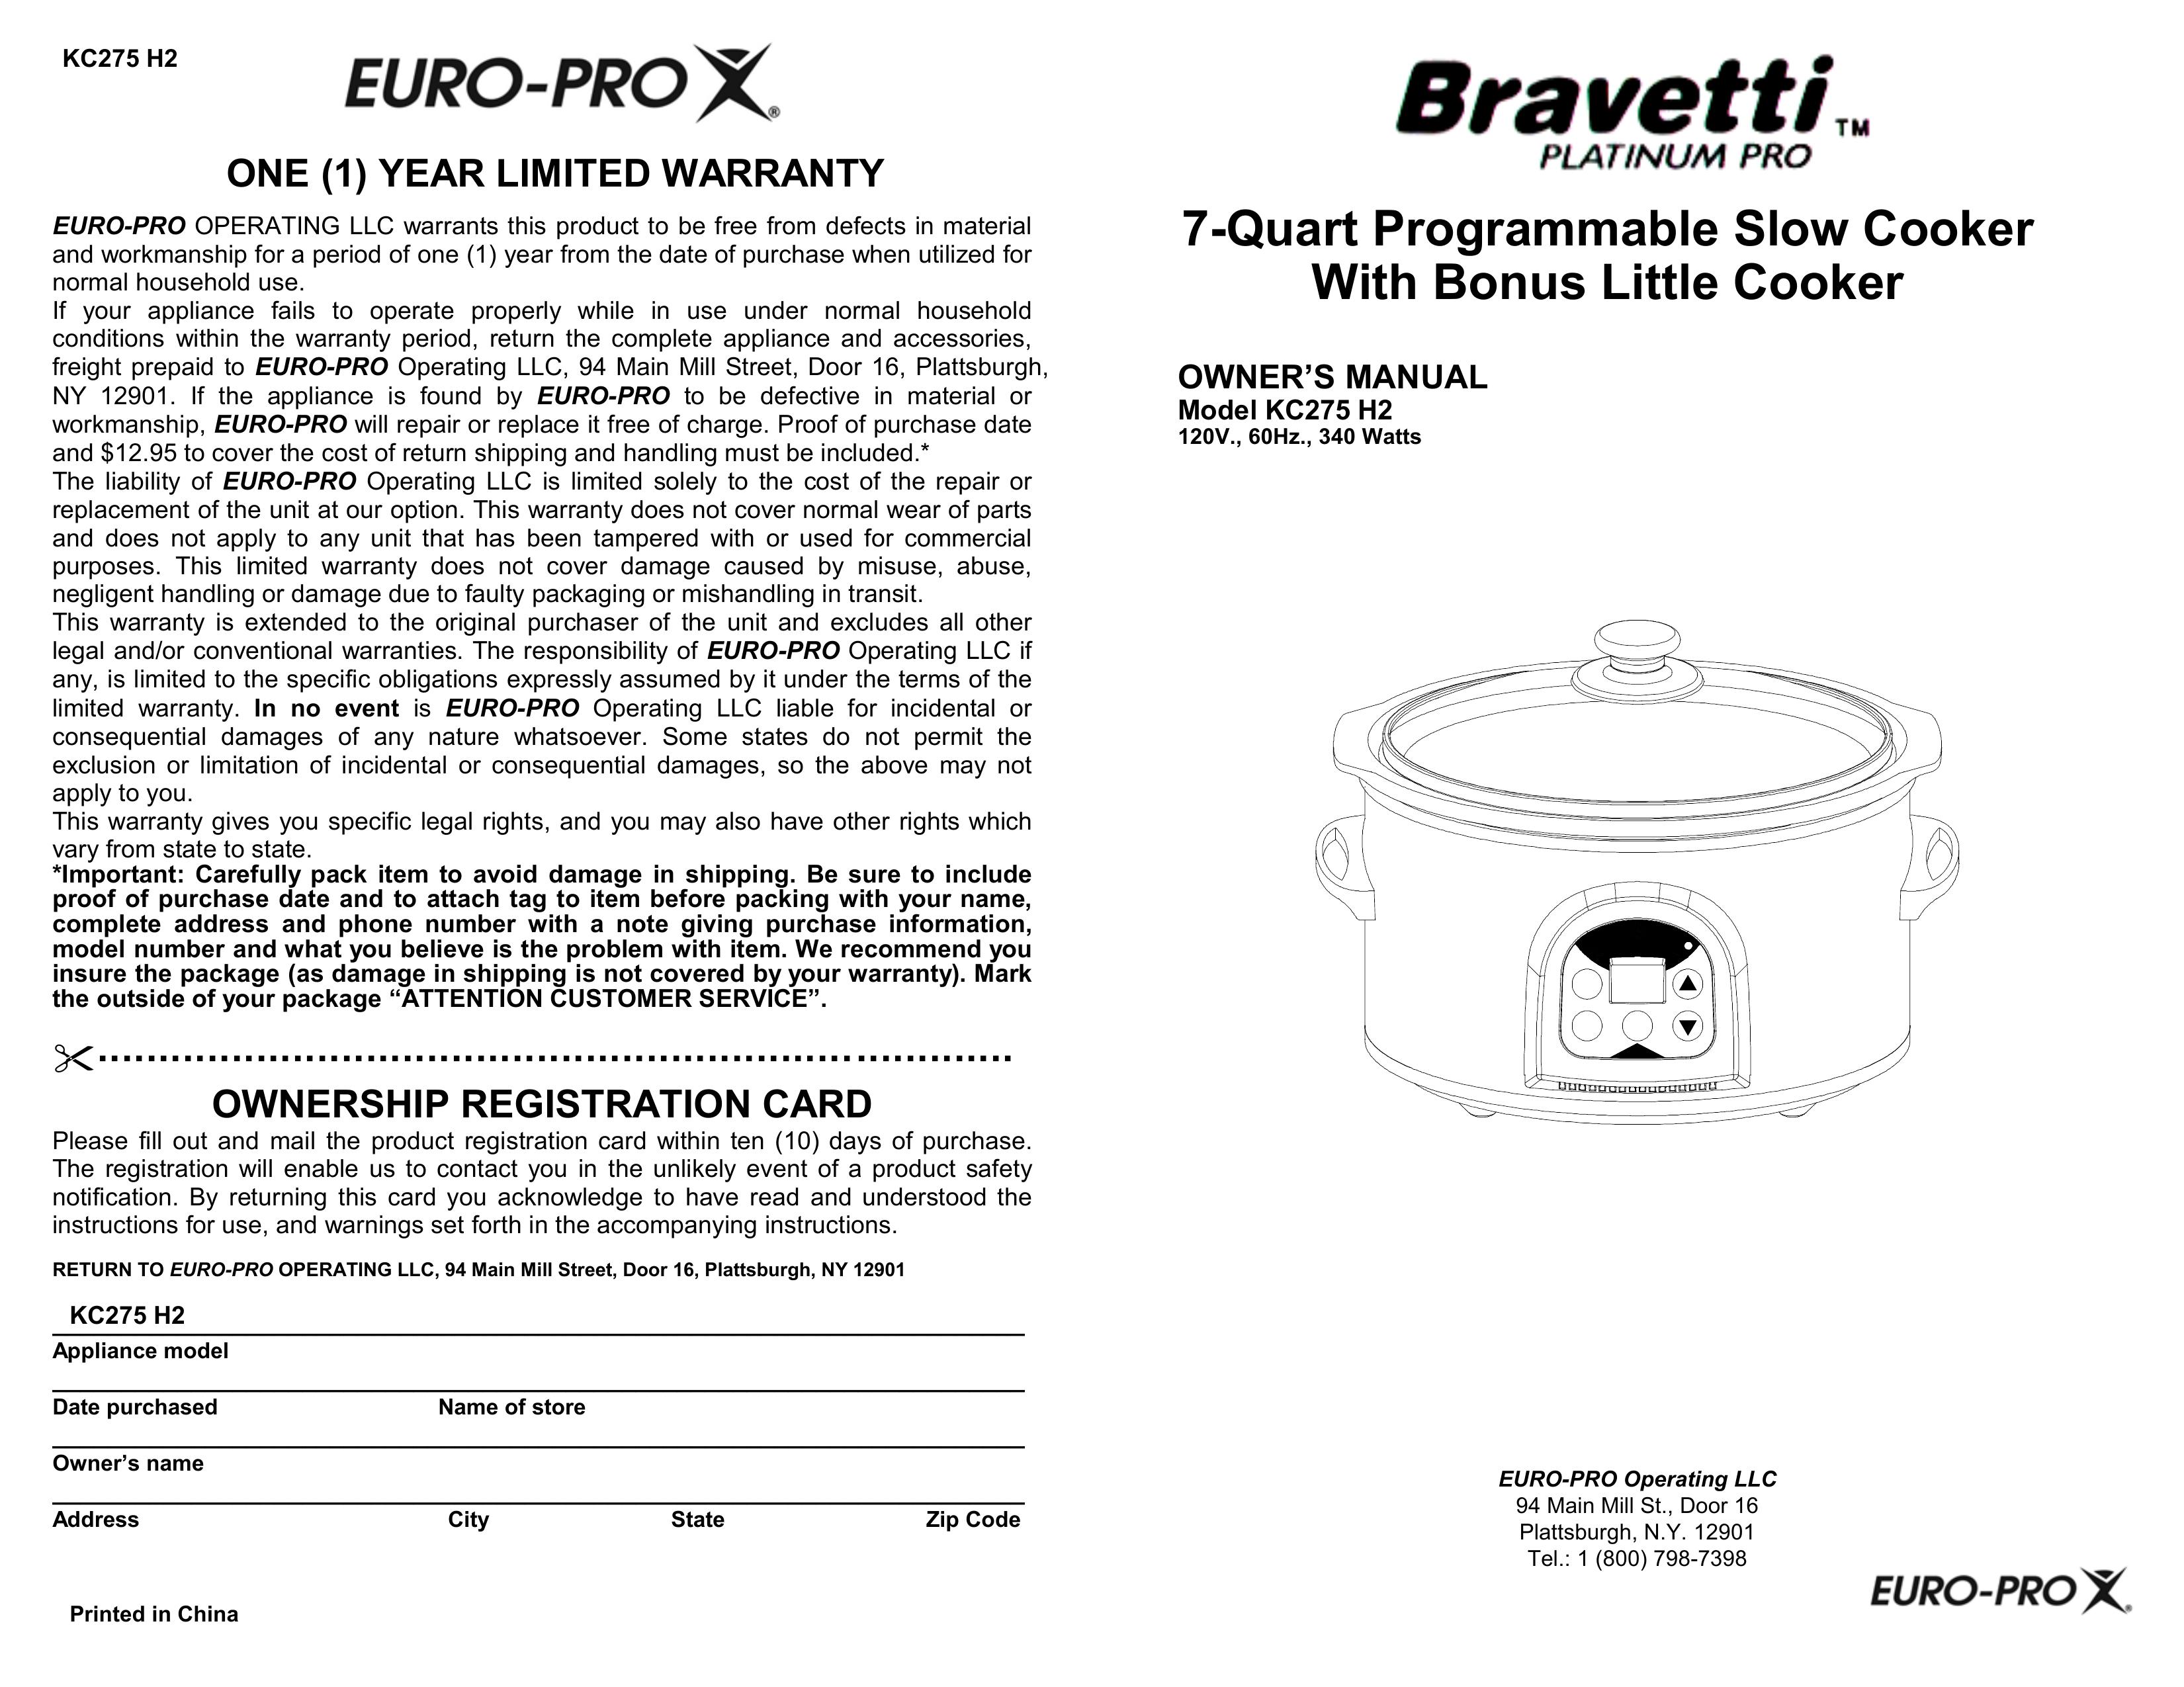 Bravetti KC275 H2 Slow Cooker User Manual